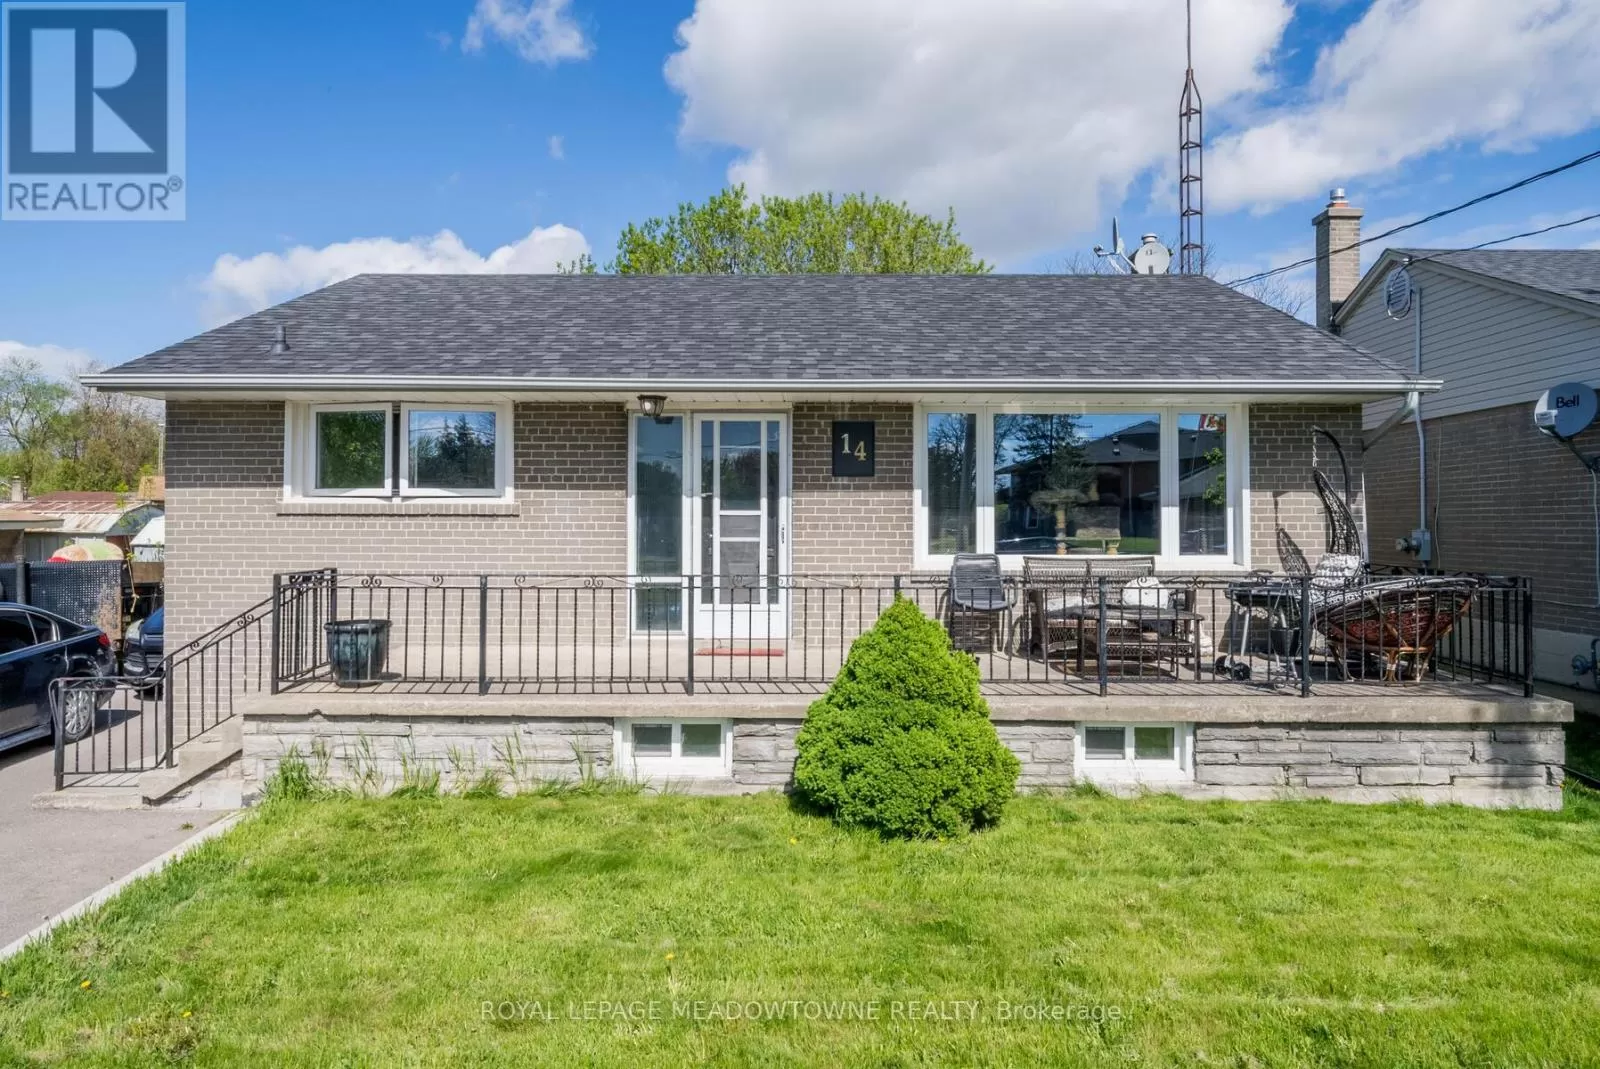 House for rent: 14 Sargent Road, Halton Hills, Ontario L7G 1K7